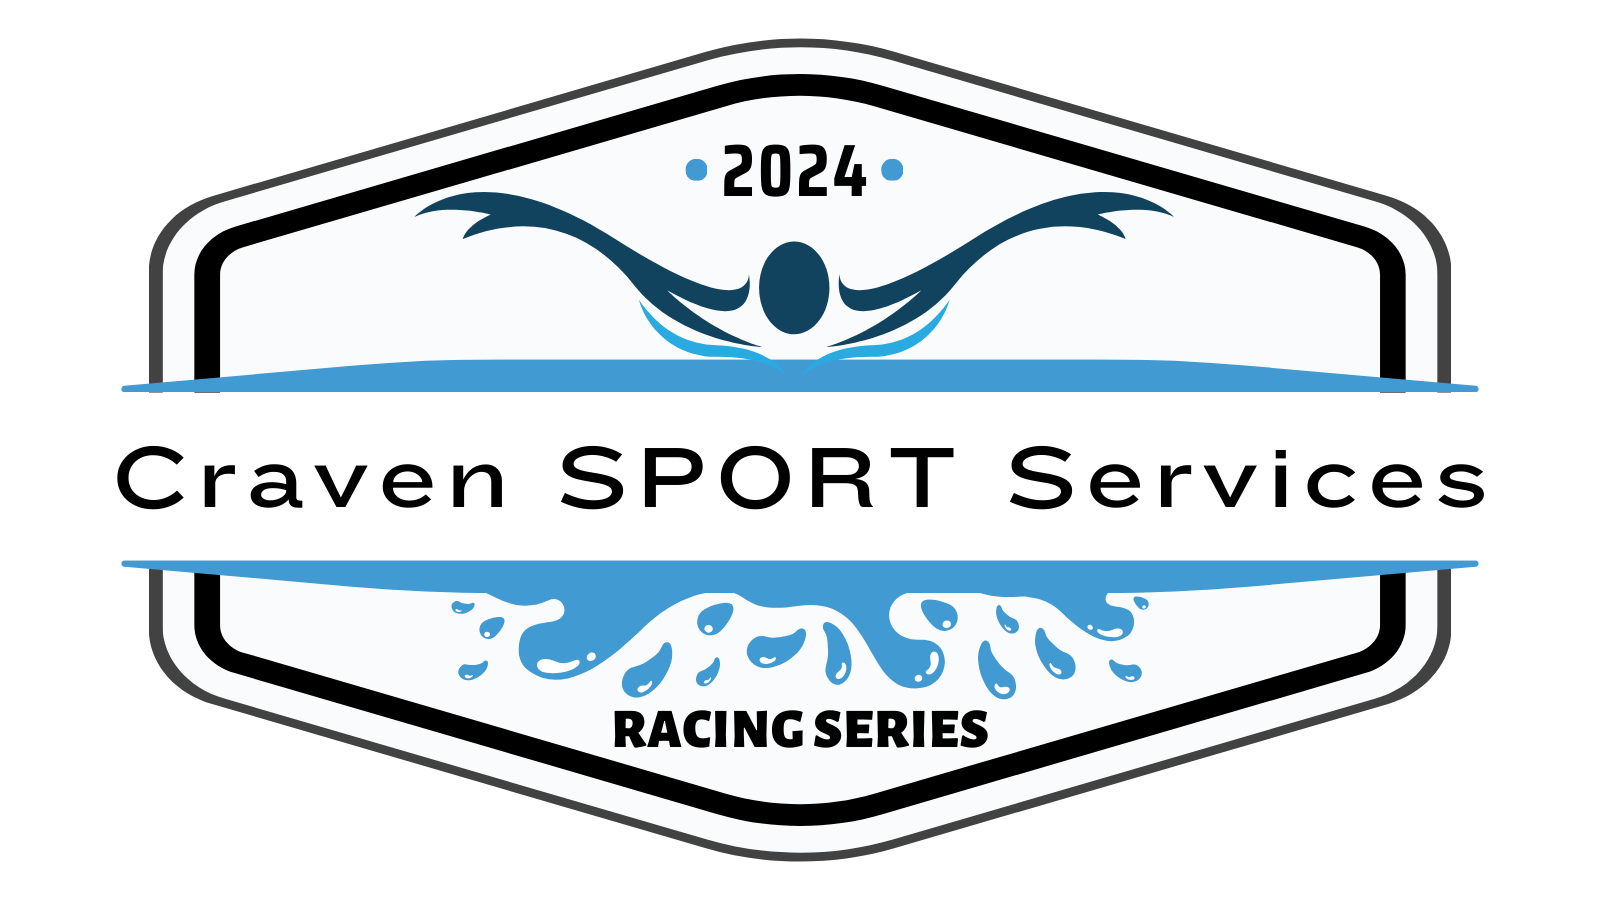 Craven SPORT Services Racing Series 3 image